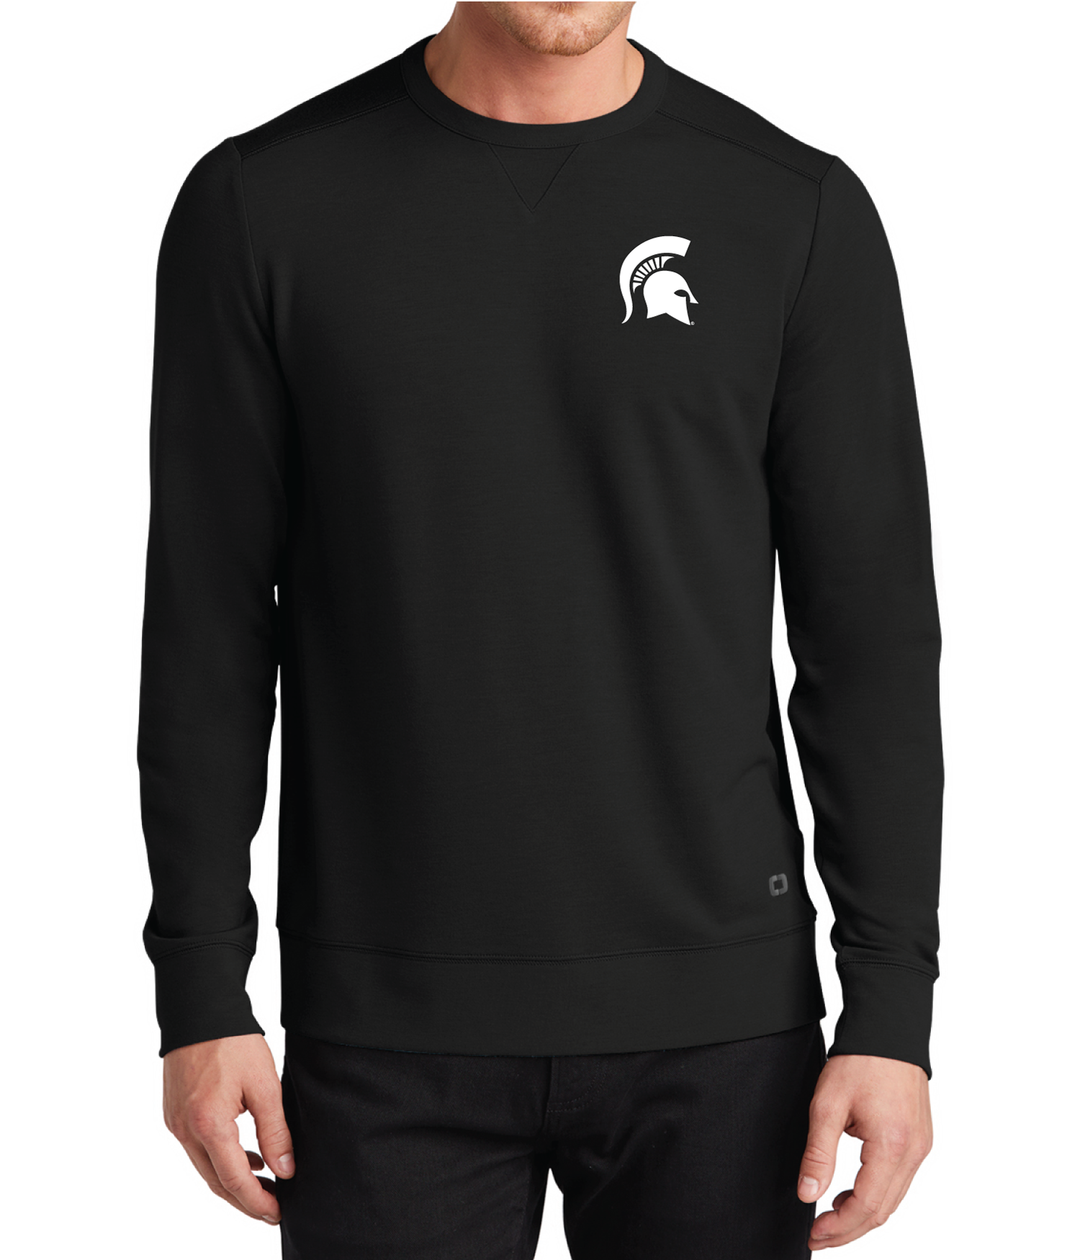 Michigan State University Premium Embroidered Super Soft Lightweight Sweatshirt